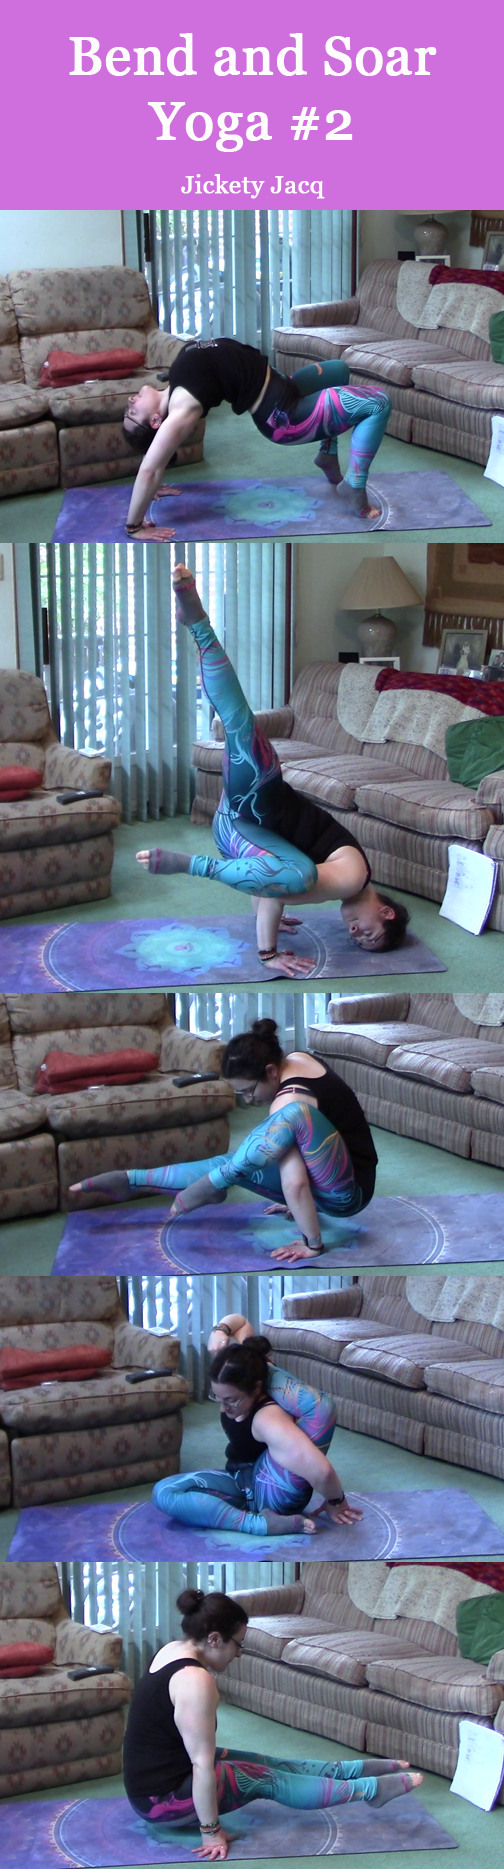 Bend and Soar Yoga 2 Jickety Jacq